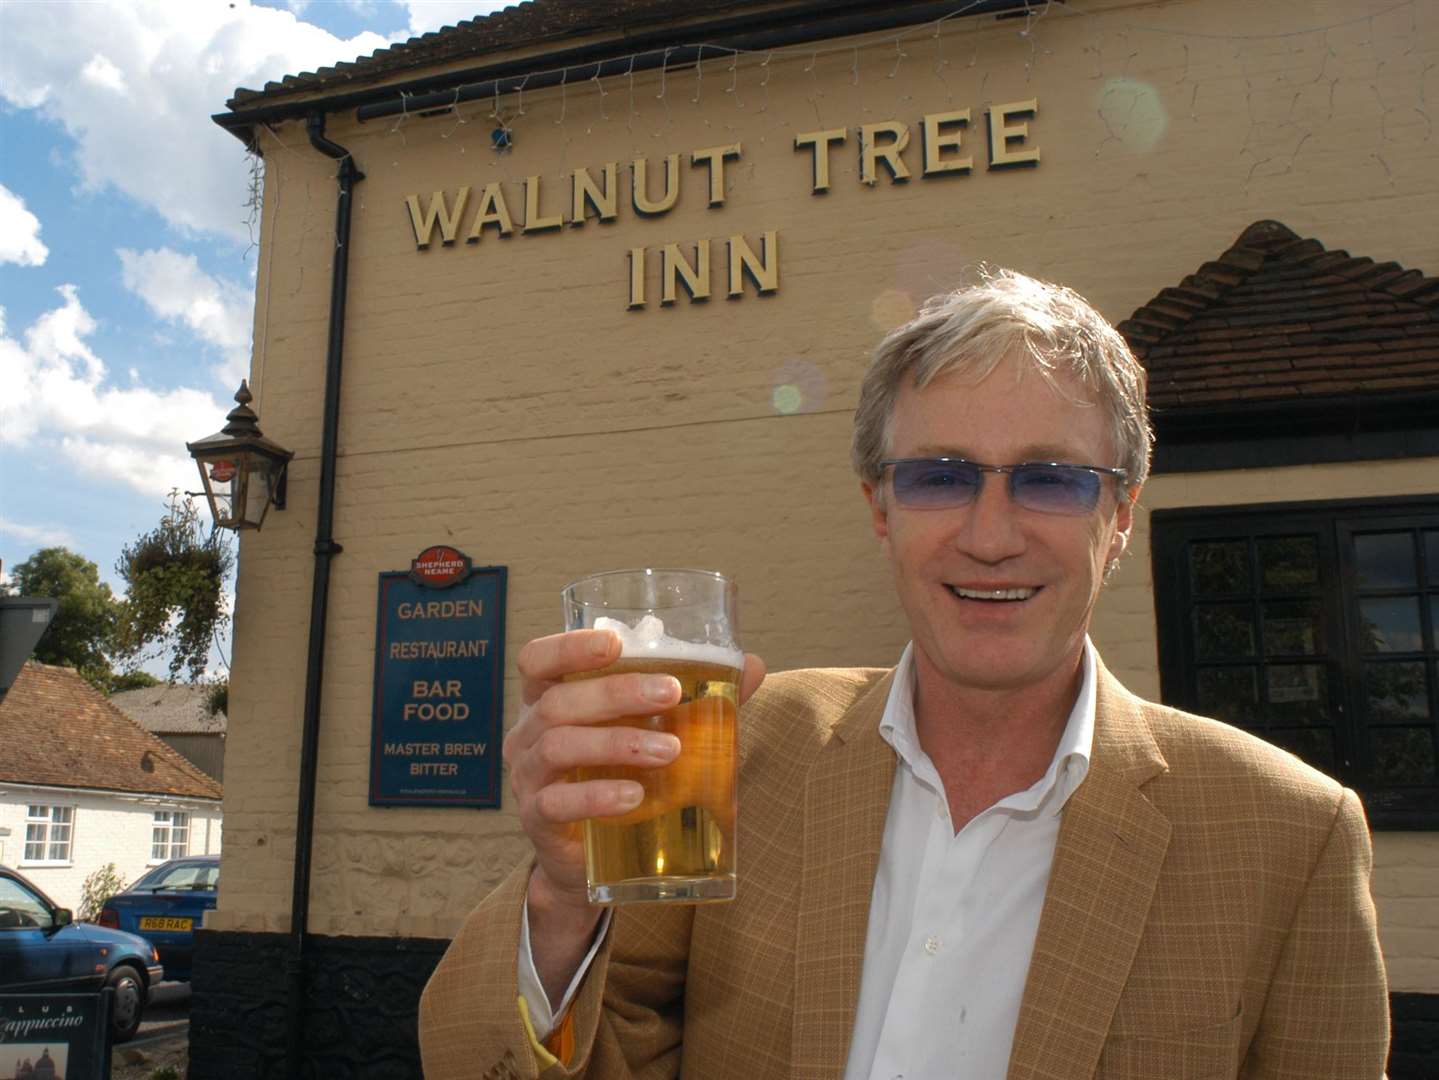 The late Paul O’Grady, who lived in Aldington, outside the Walnut Tree Inn in June 2004